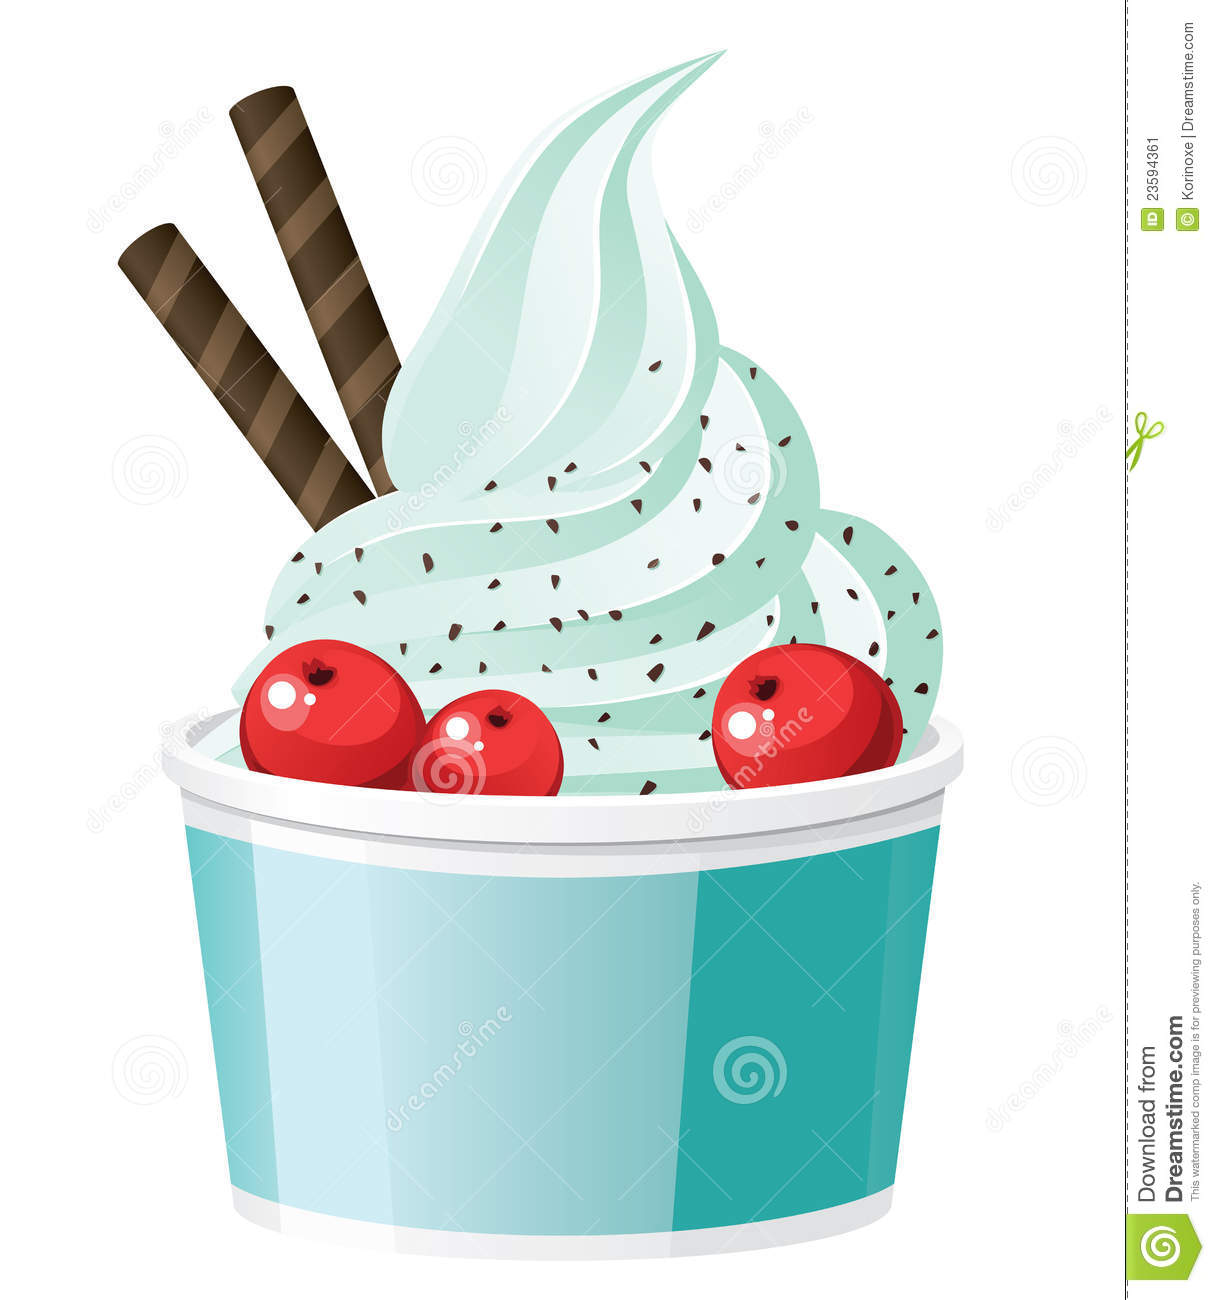 Frozen Yogurt With Cranberries Stock Image Image 23594361